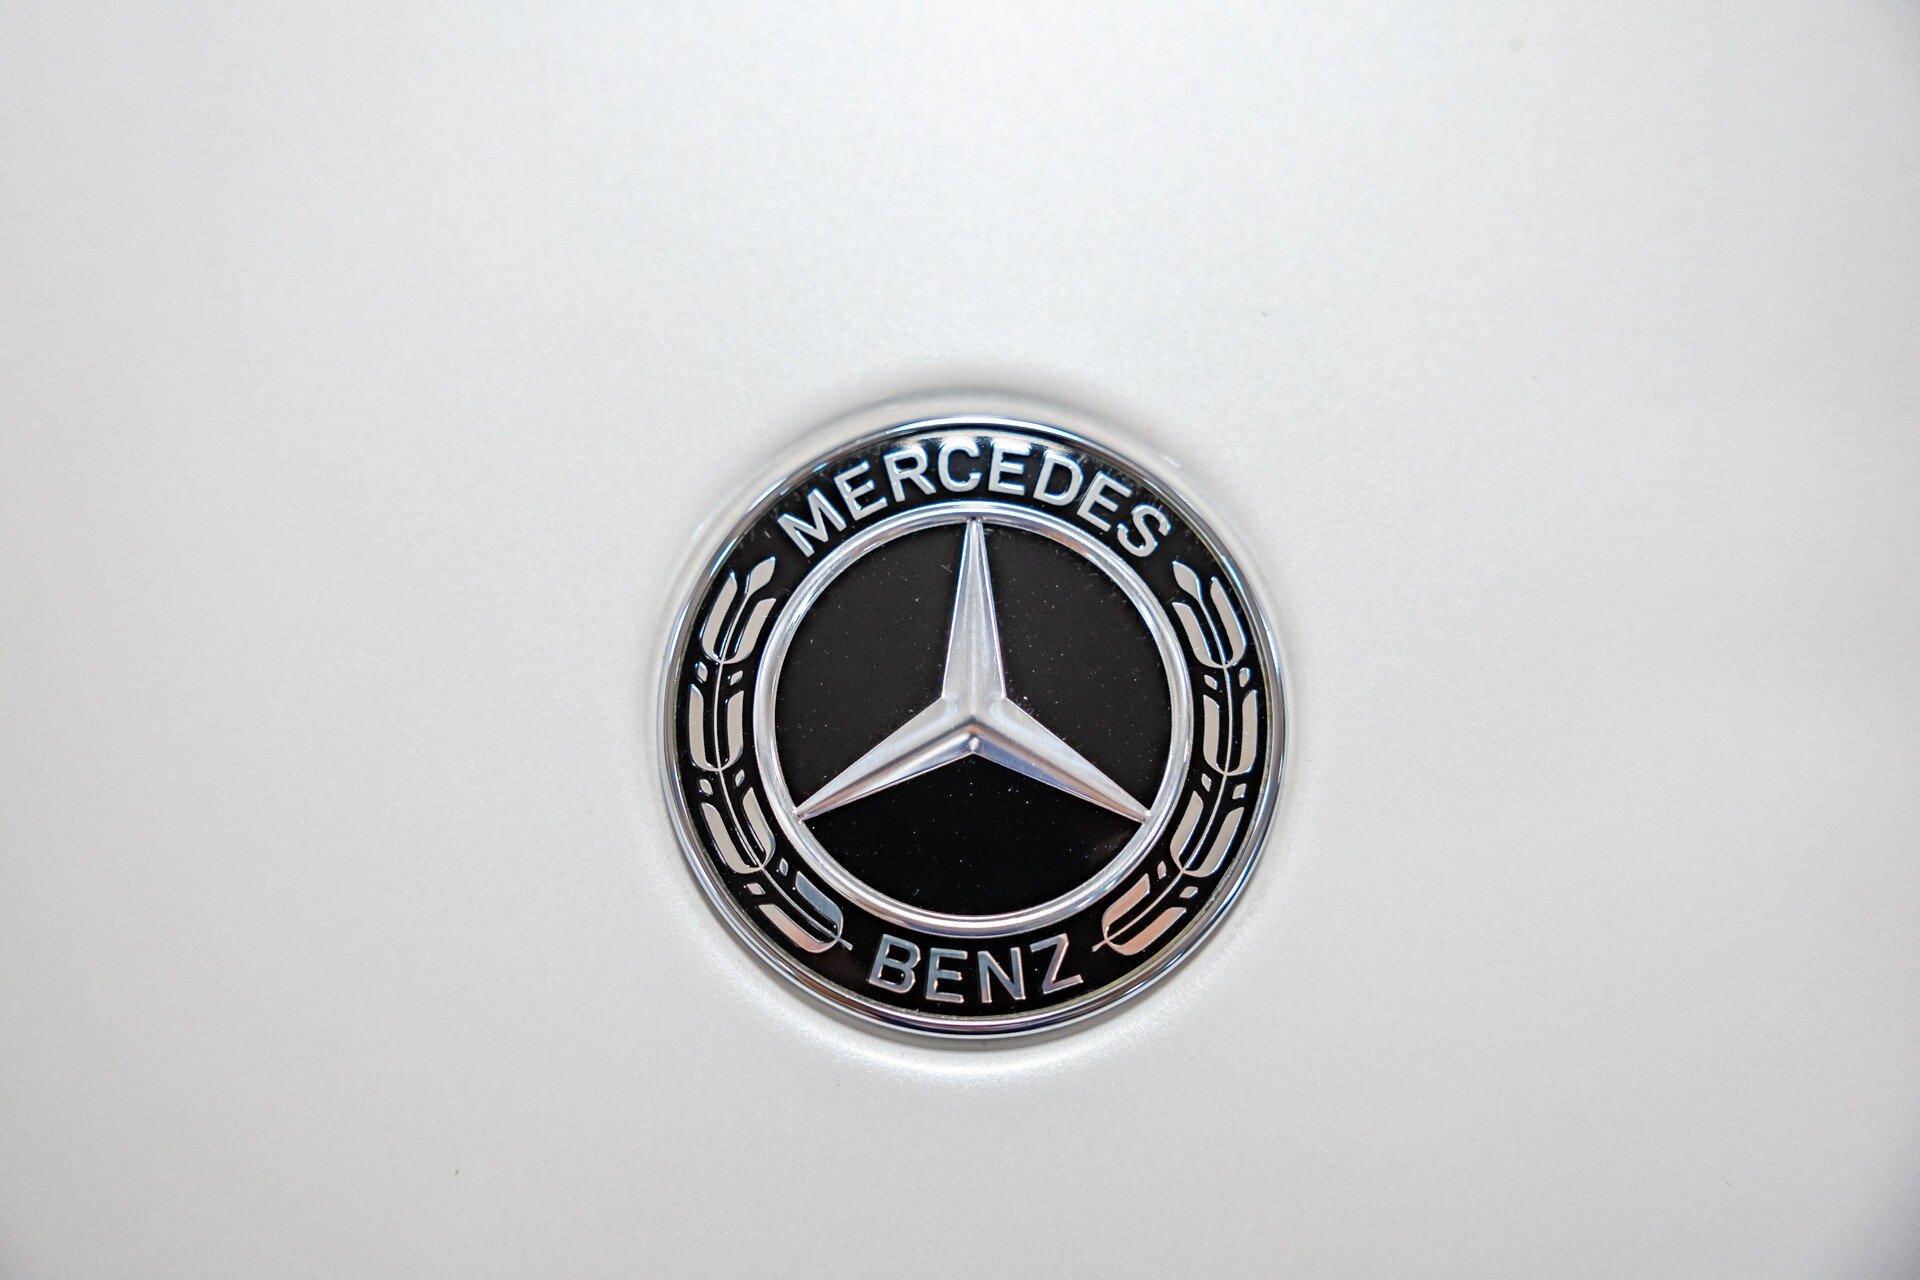 Queen on GLE63S. Mercedes, Mercedes benz, Mercedes logo, Mercedes